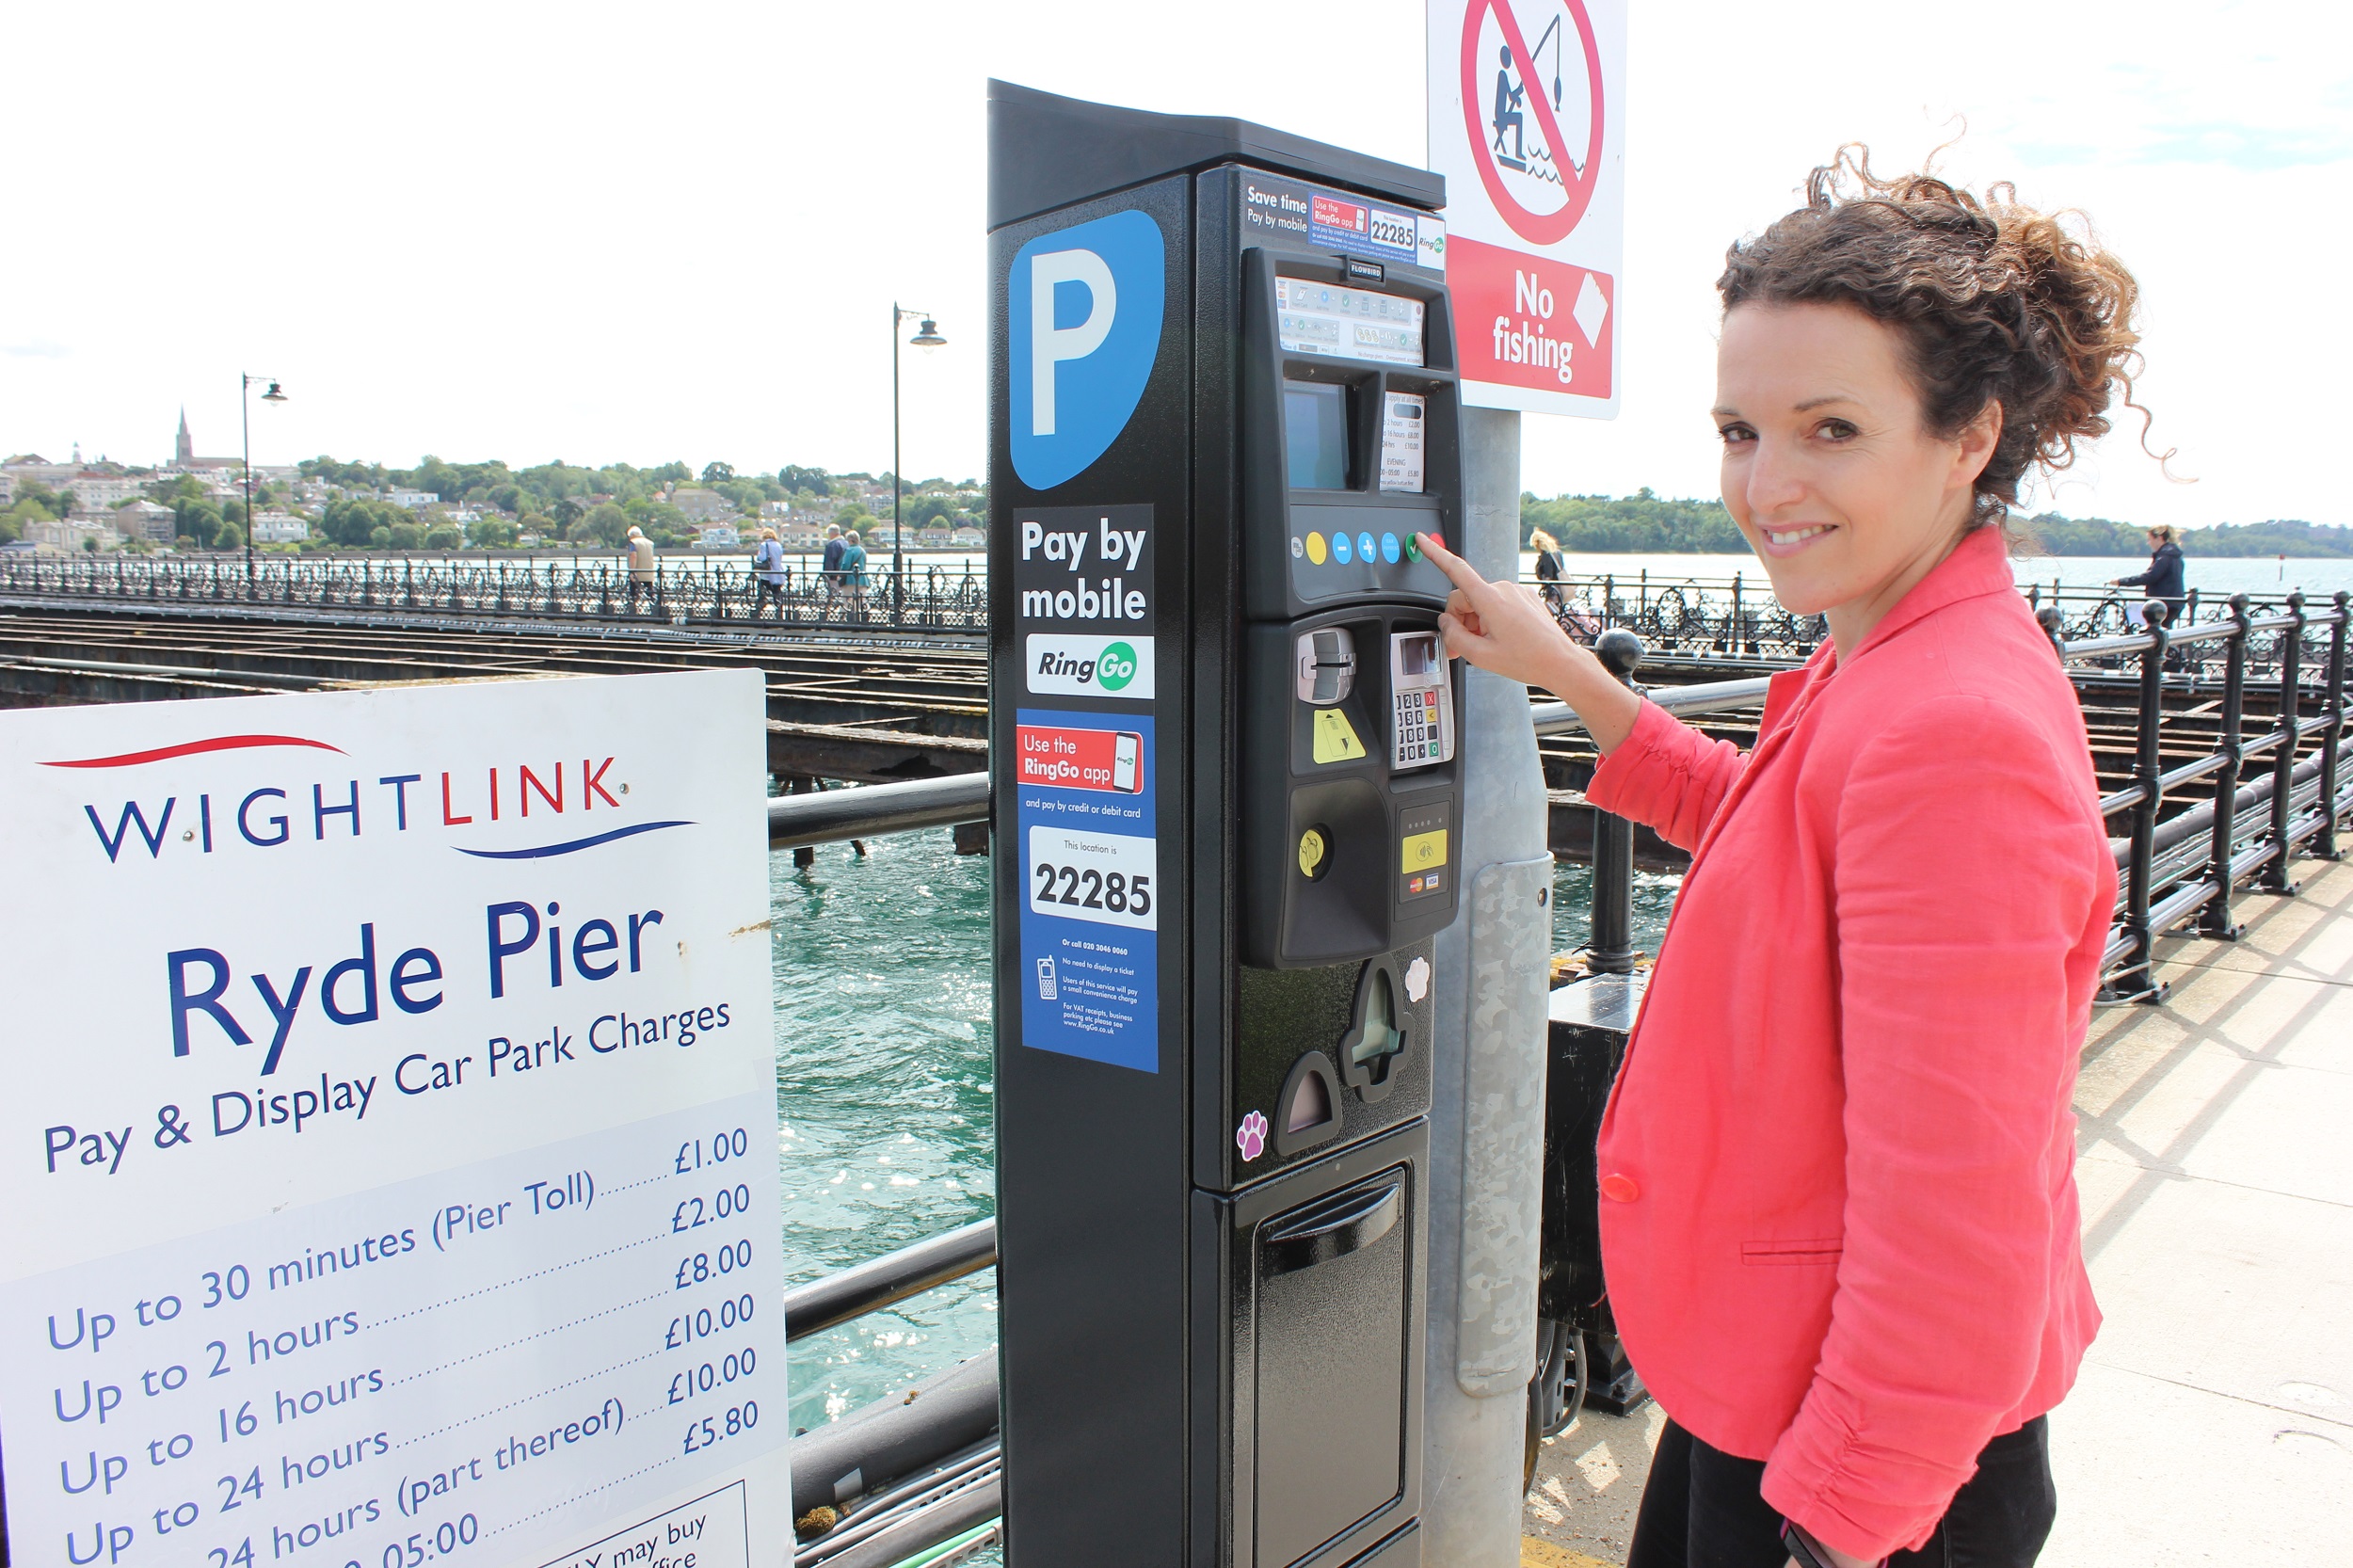 Ryde Pier parking meter